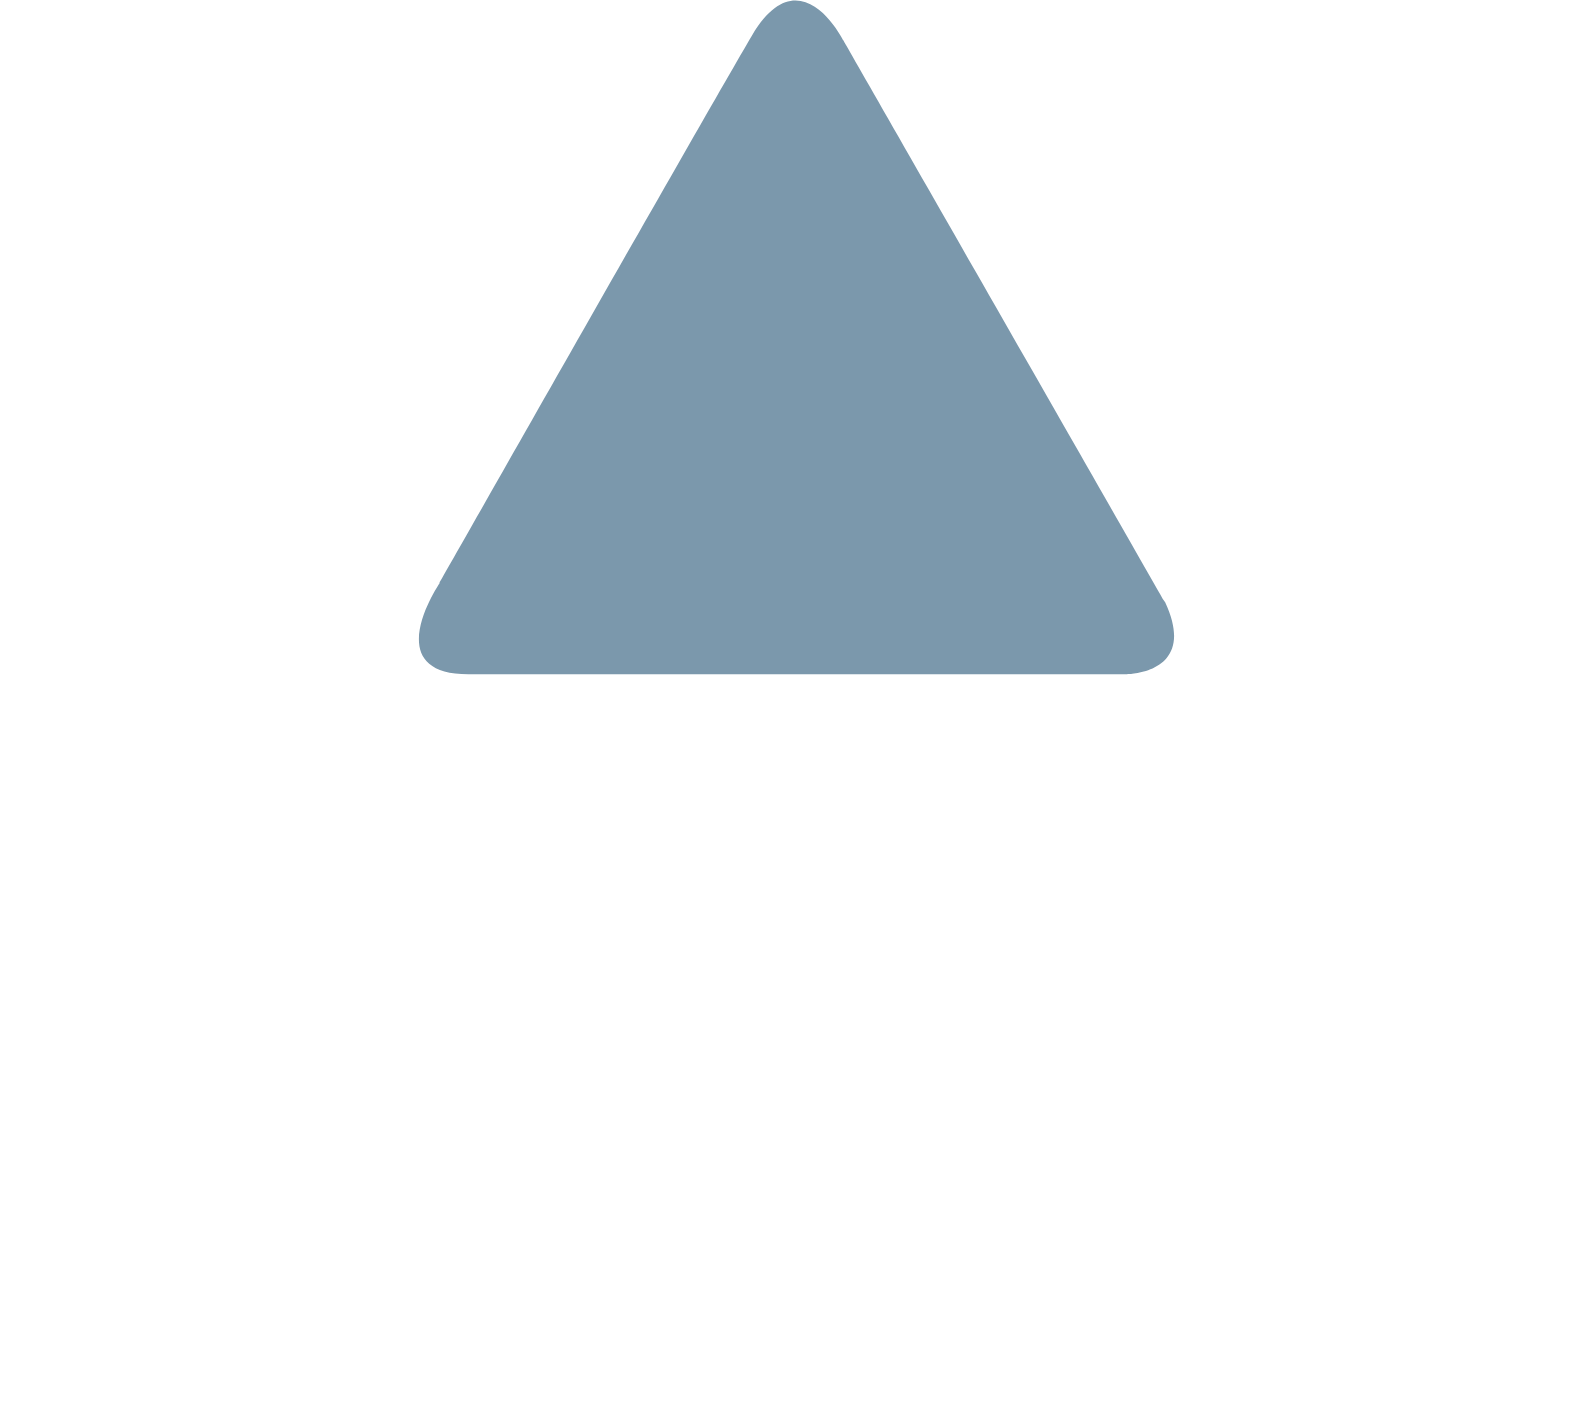 Tritax Big Box REIT logo for dark backgrounds (transparent PNG)